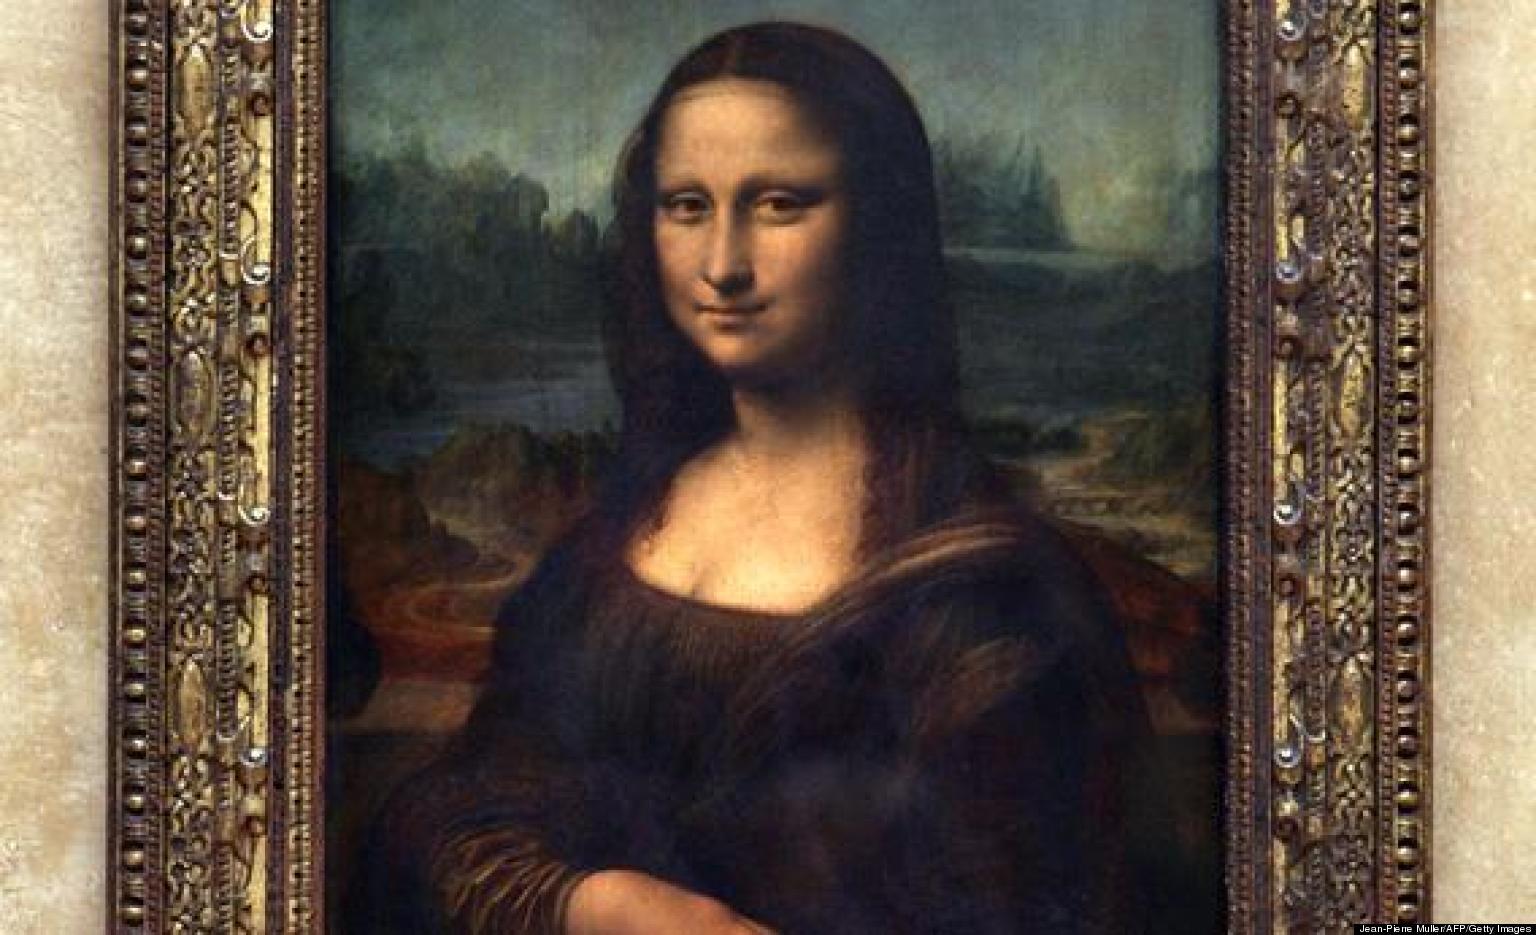 Wallpaper Mona Lisa id:86 1536 x 935 Image topwallpaper.eu